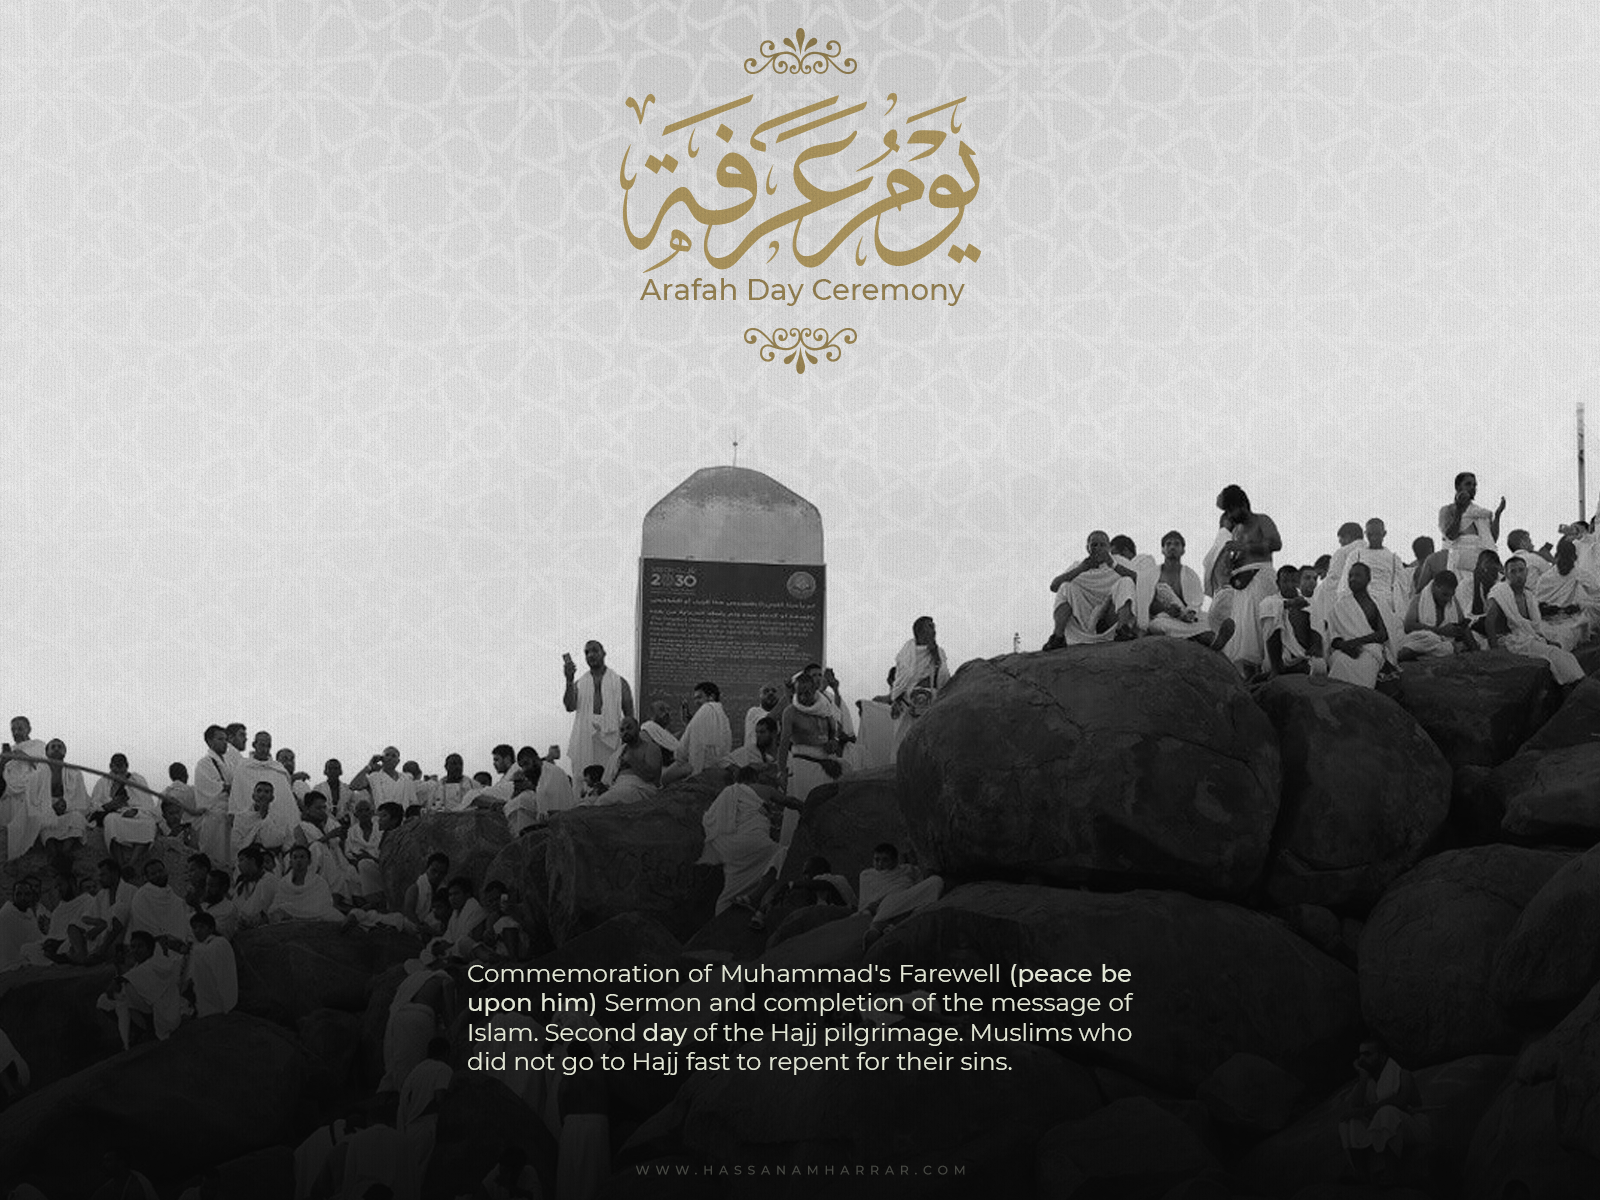 arafat day 2022 يوم عرفة 2022 by Hassan Amharrar on Dribbble